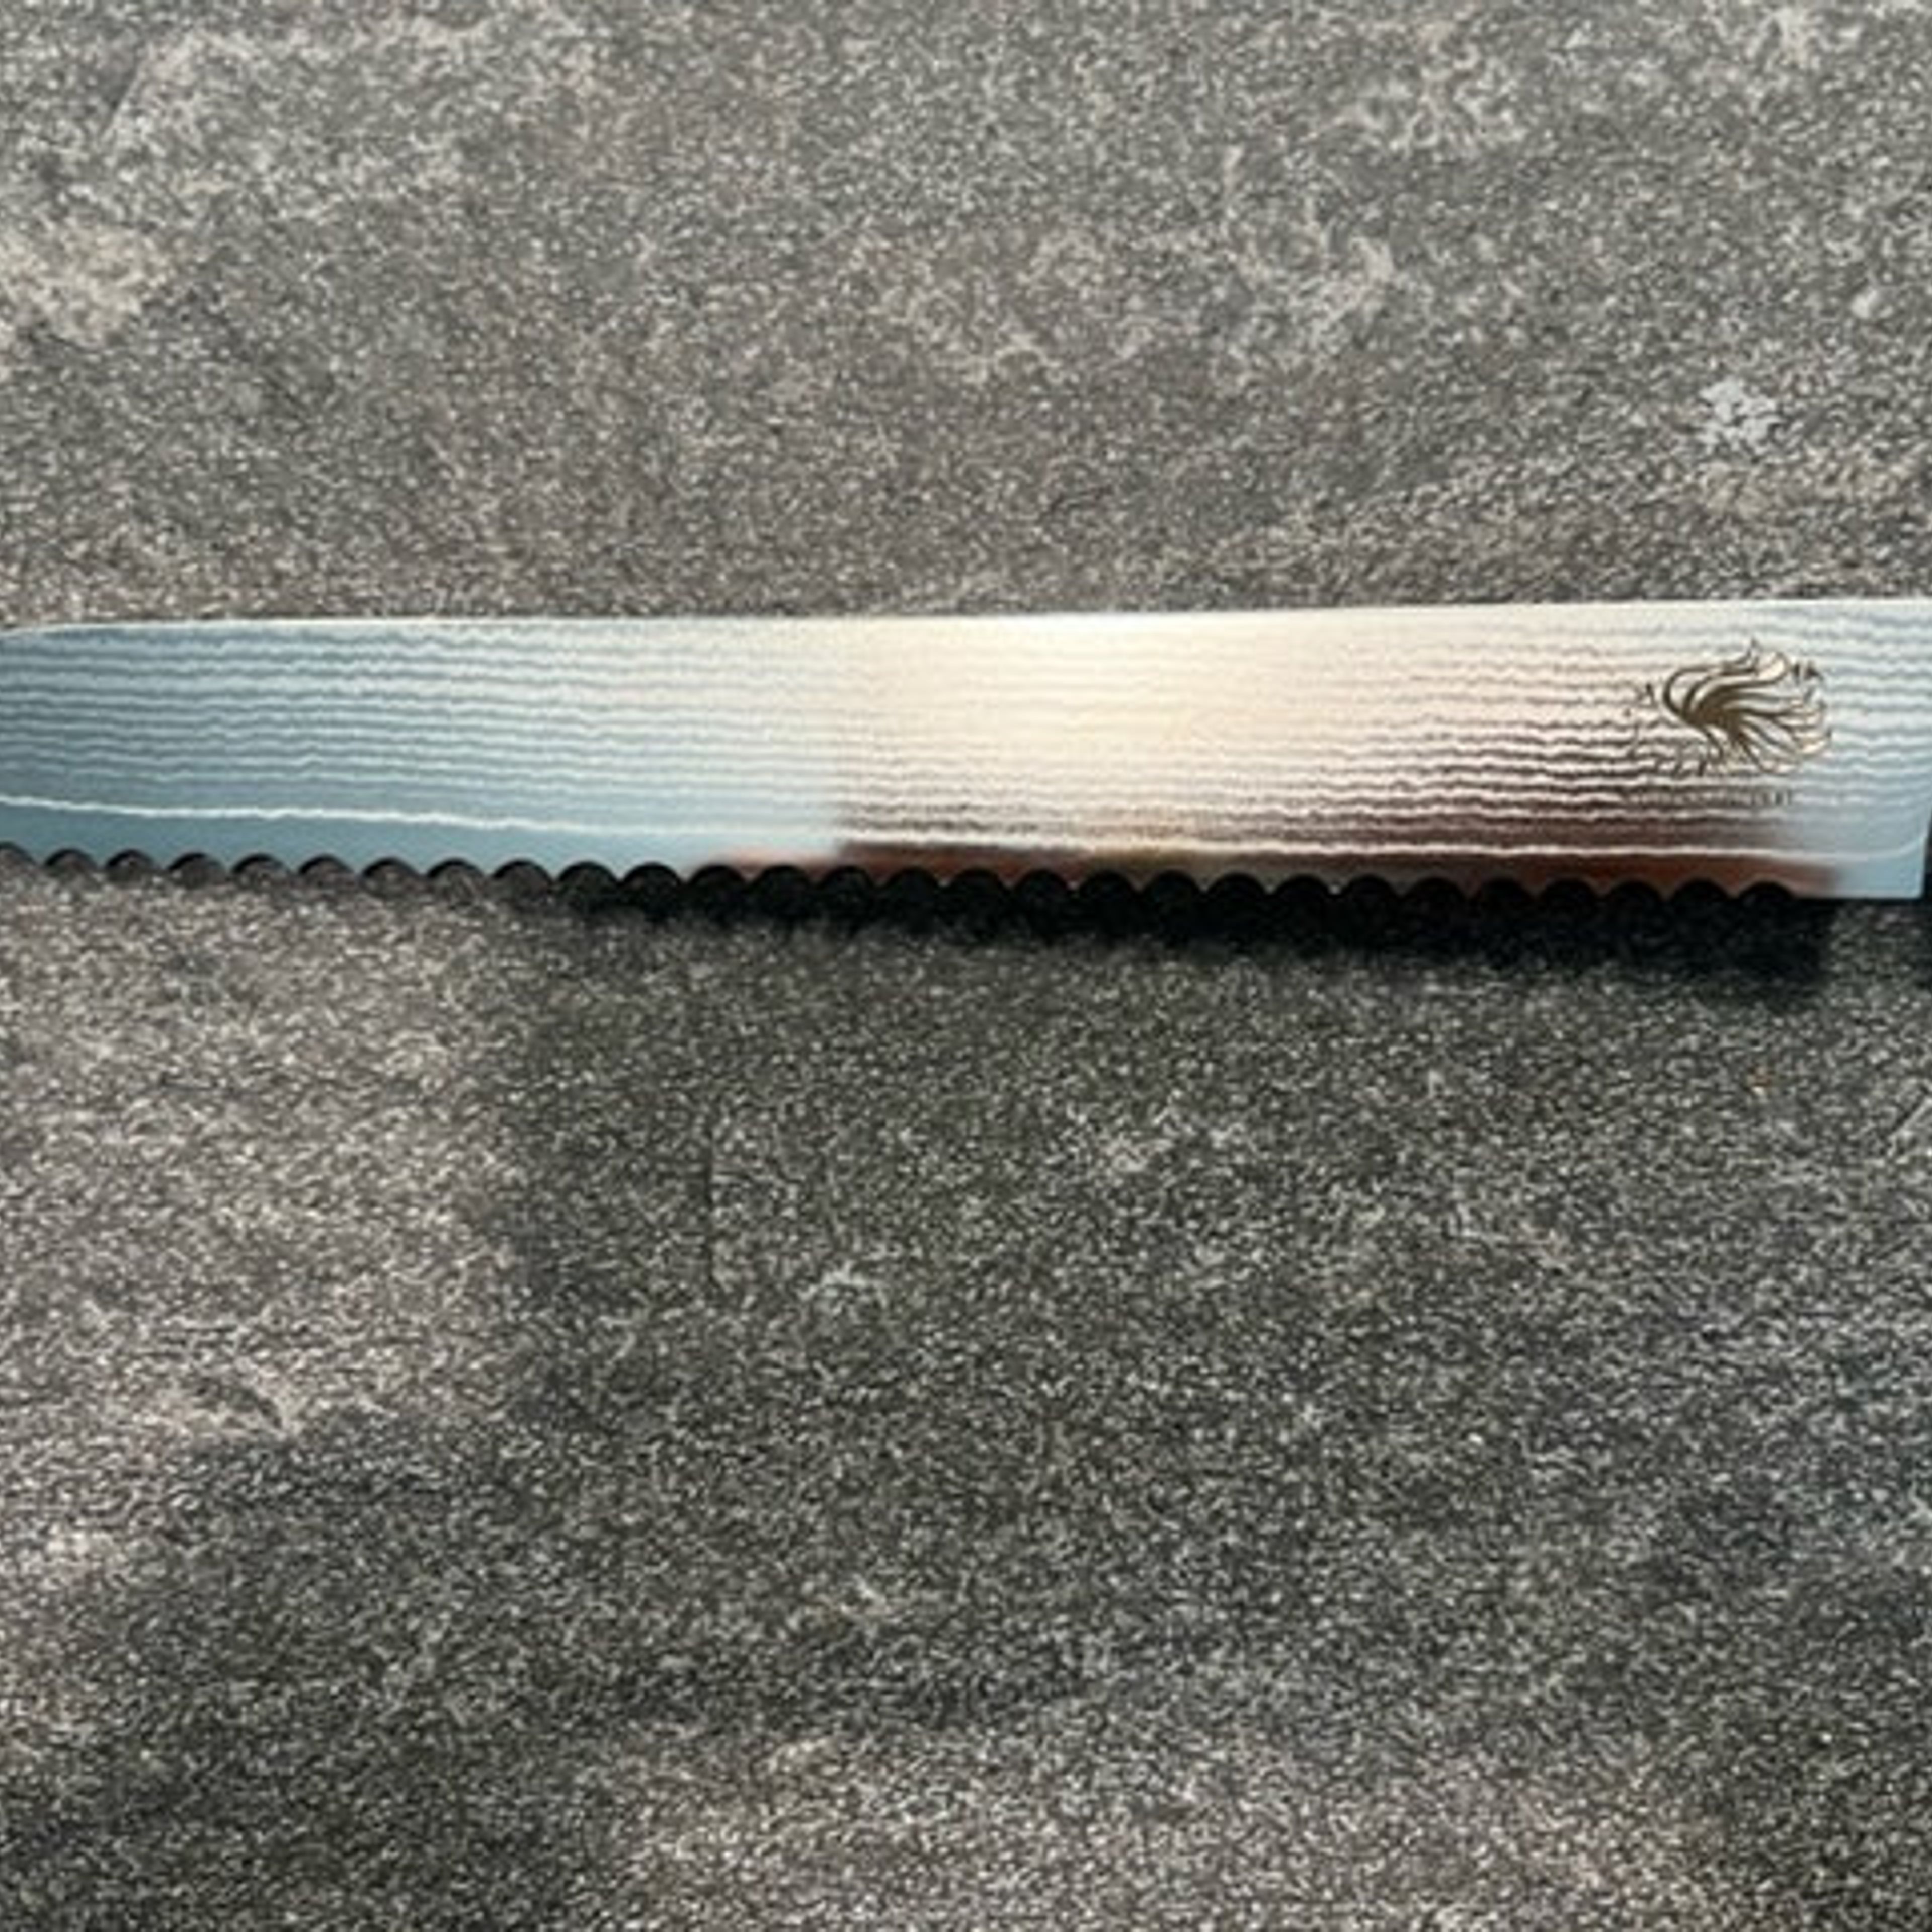 8 Inch Japanese VG-10 Damascus Serrated Knife